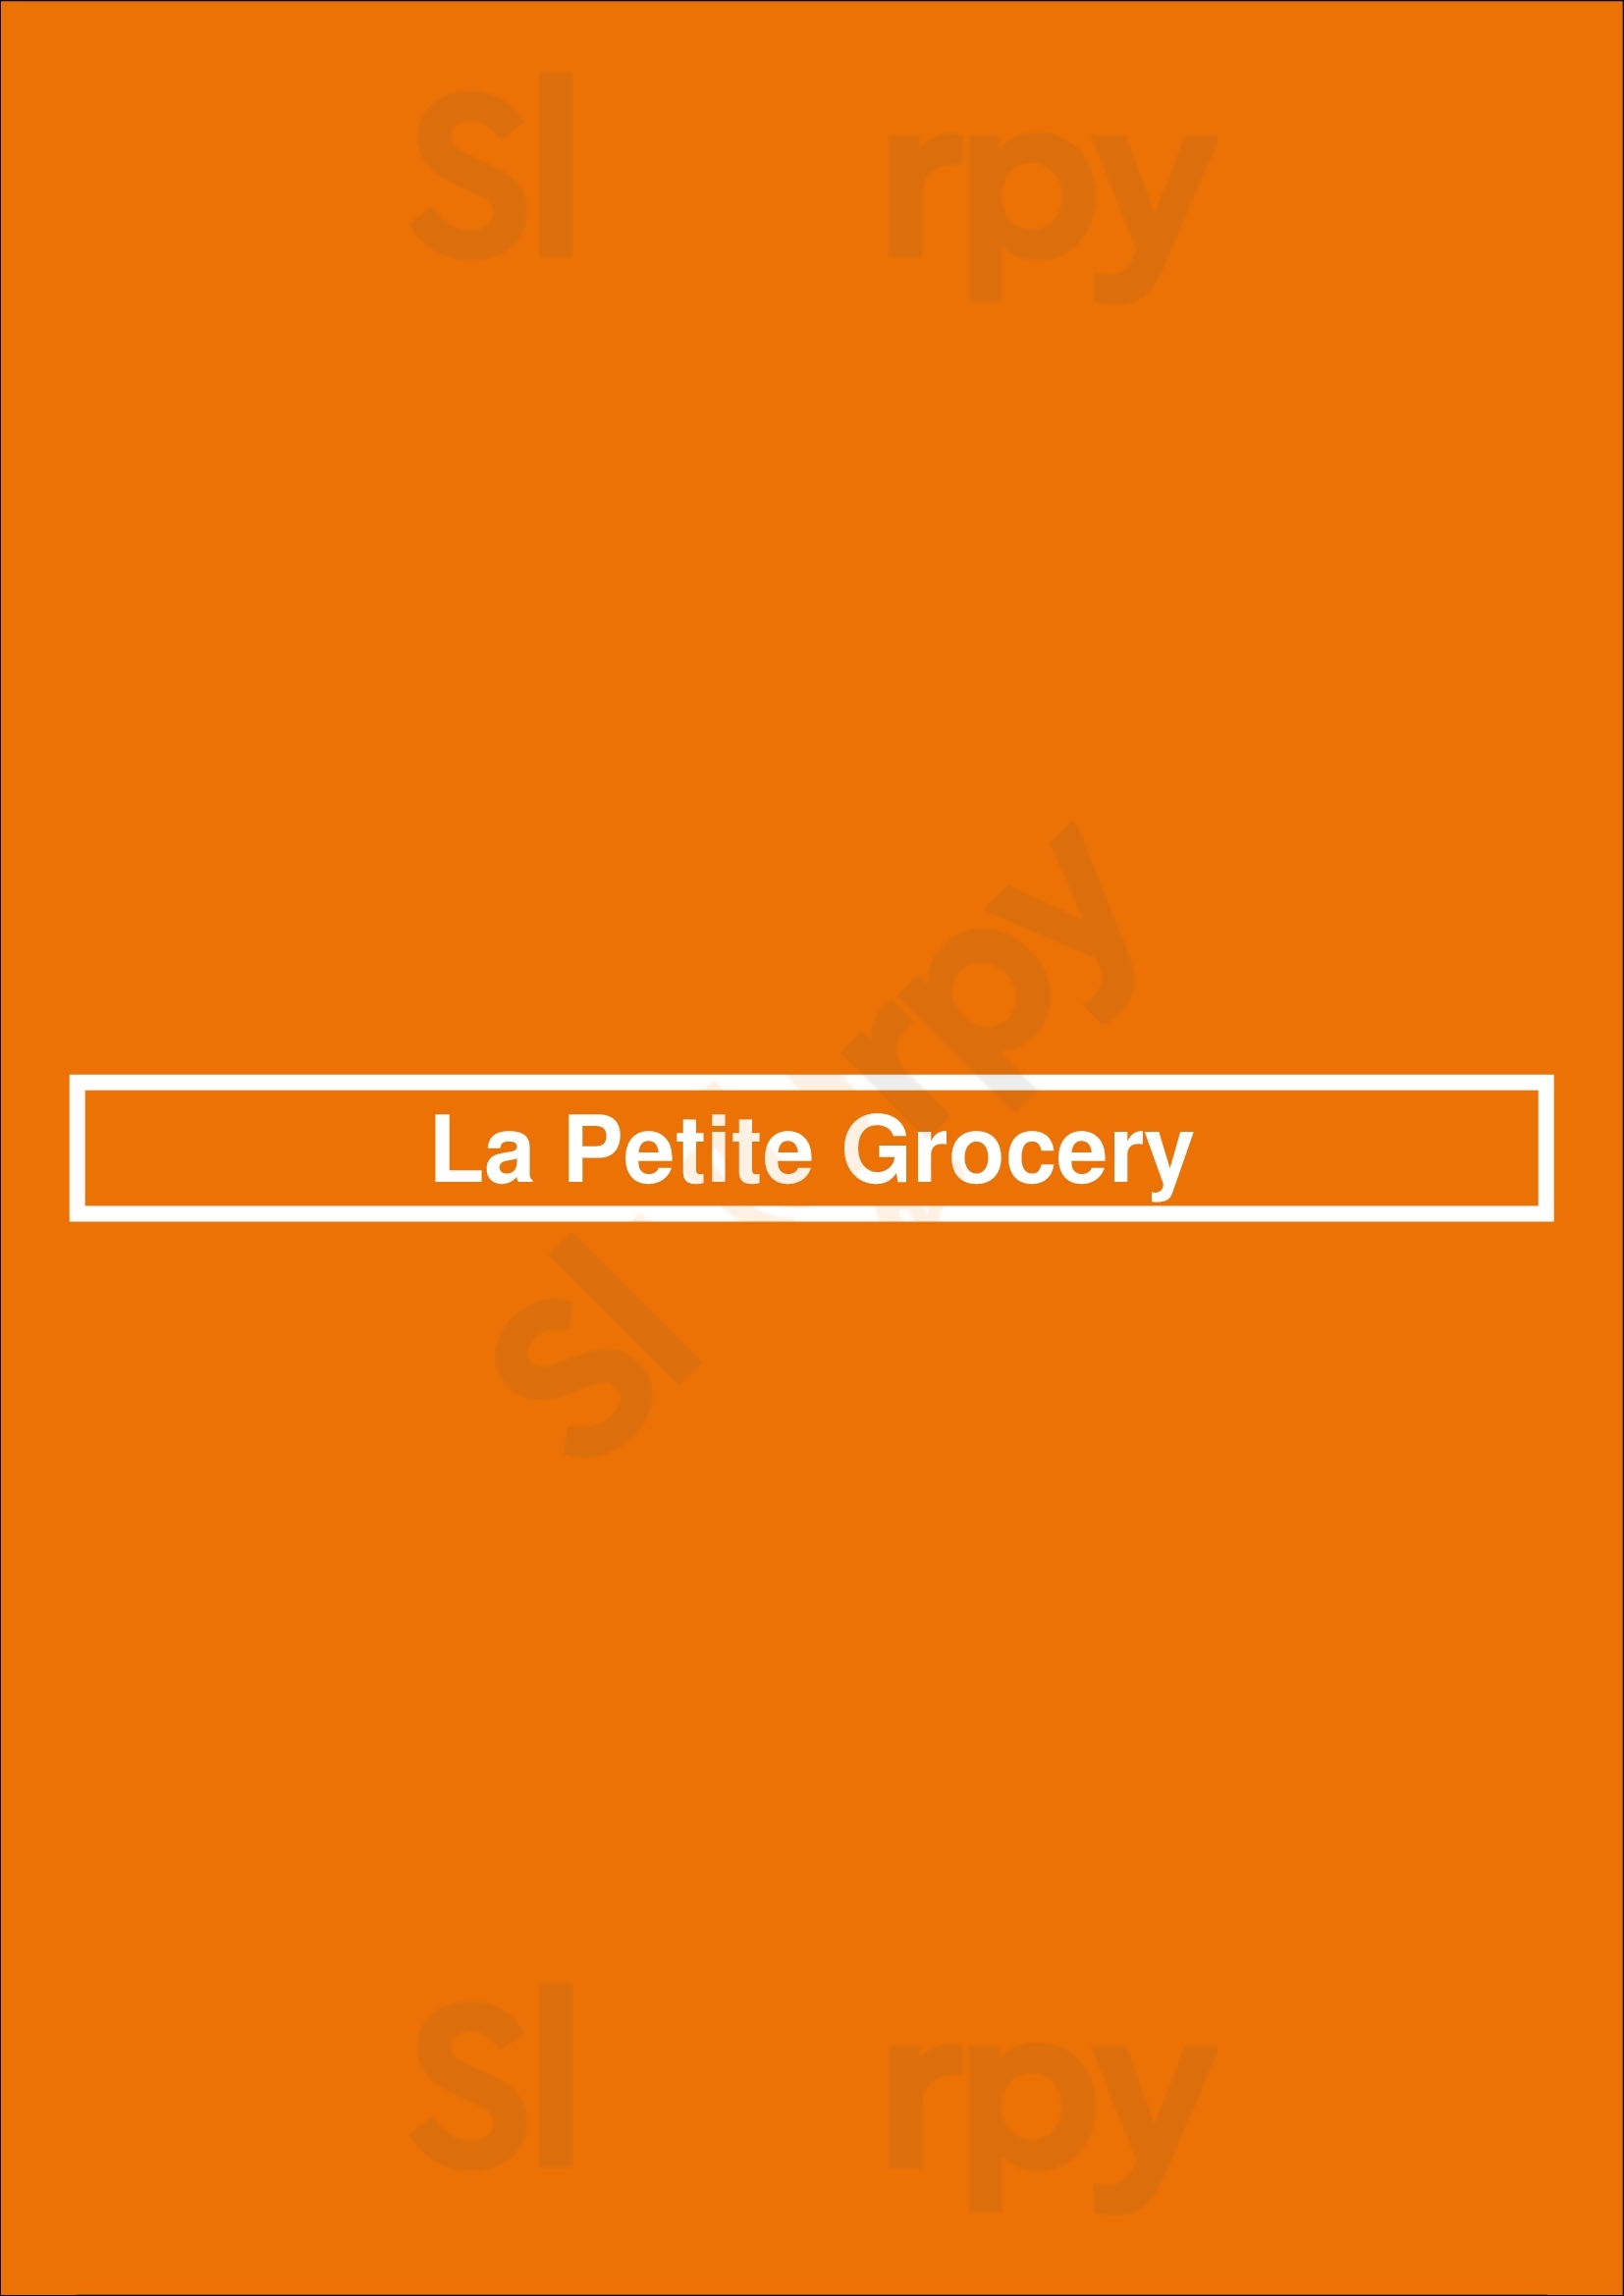 La Petite Grocery New Orleans Menu - 1